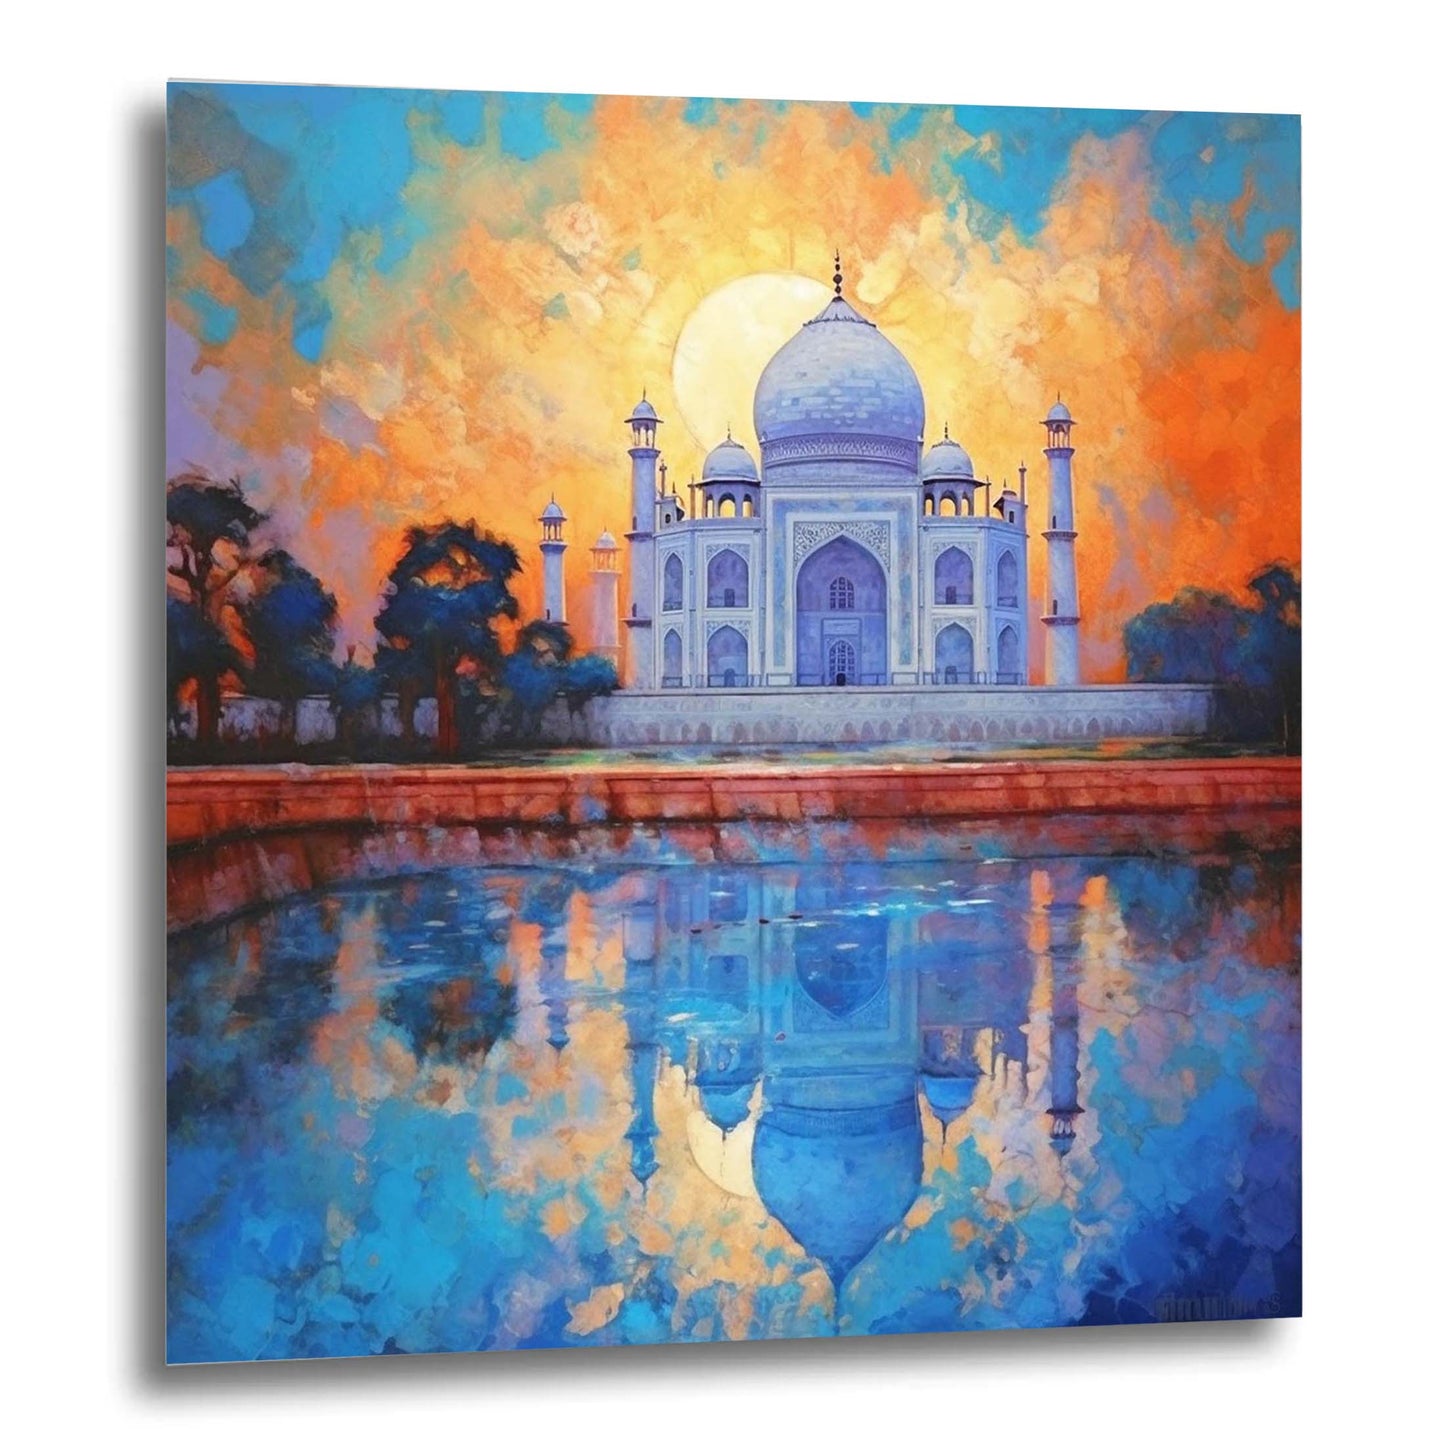 Taj Mahal - mural in the style of impressionism